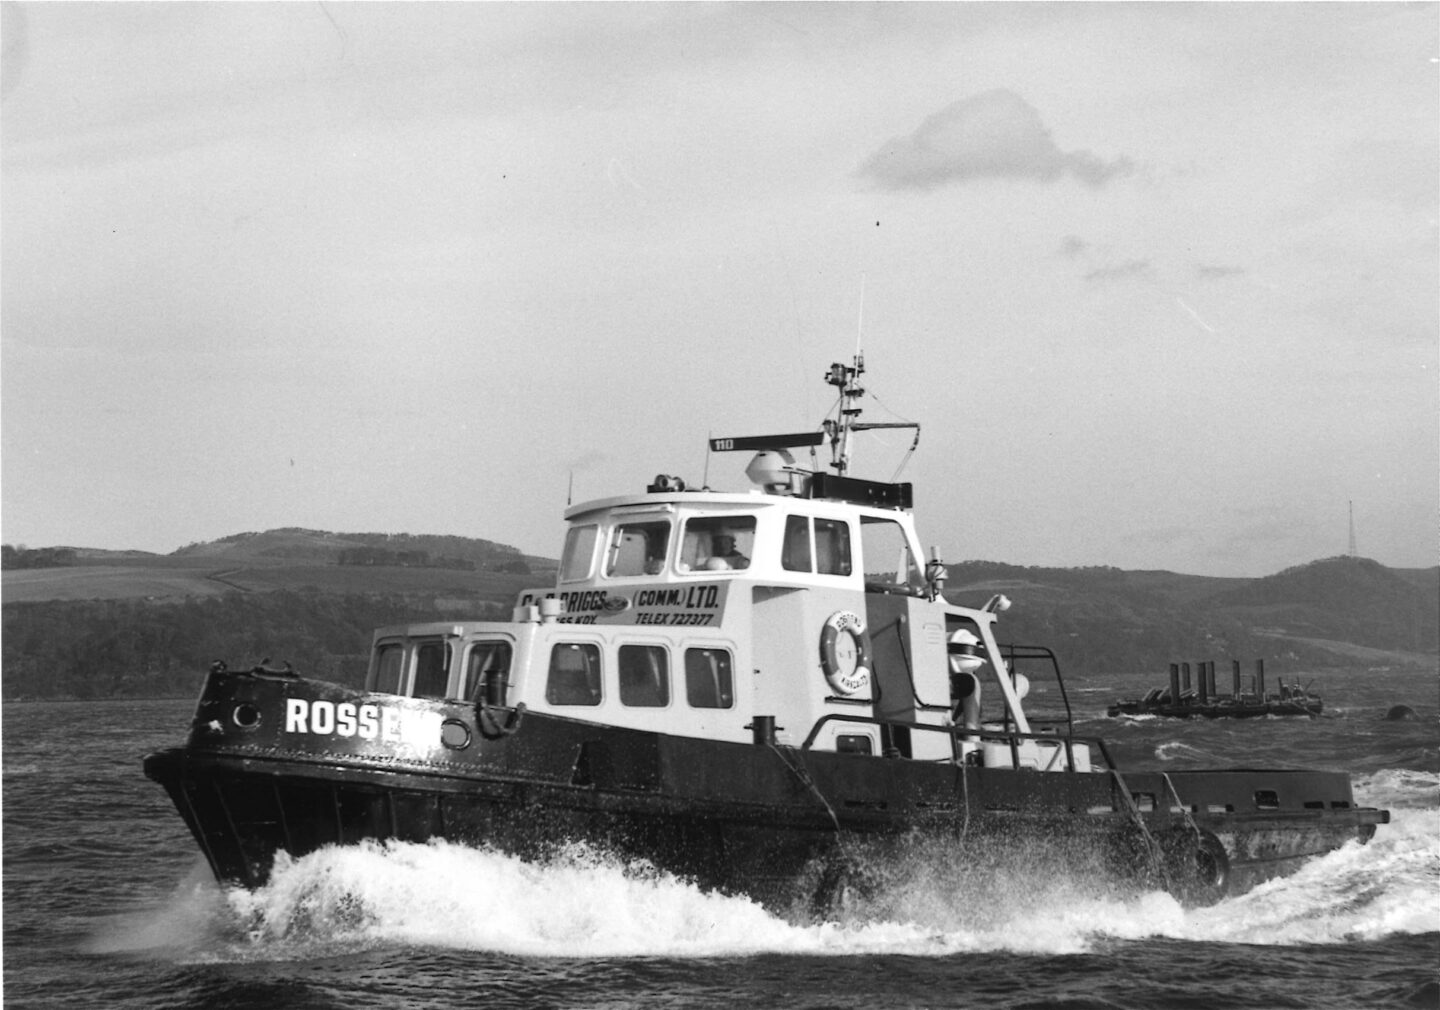 One of Briggs Marine's first workboats